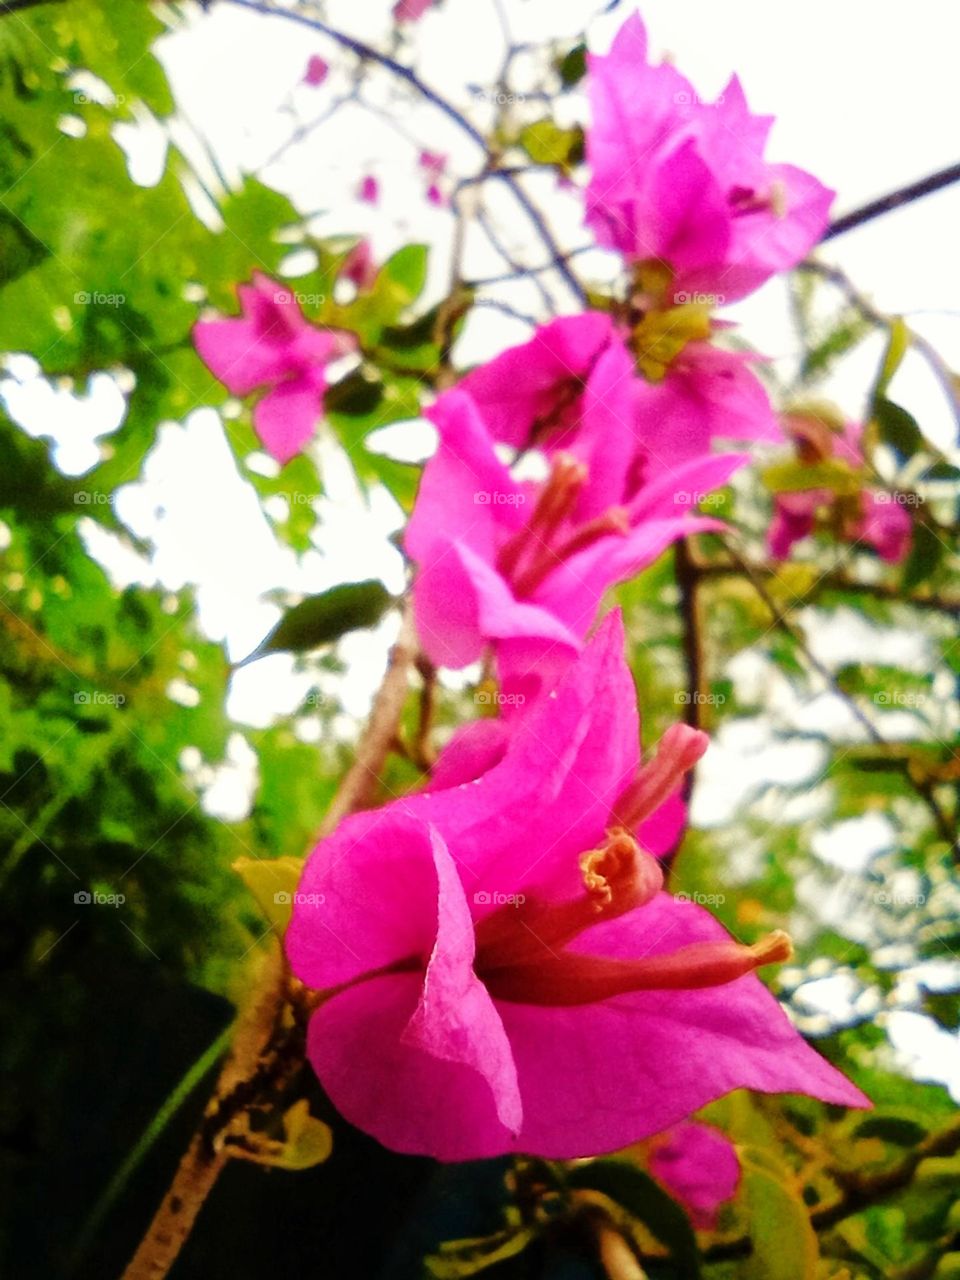 Magenta colour flowers